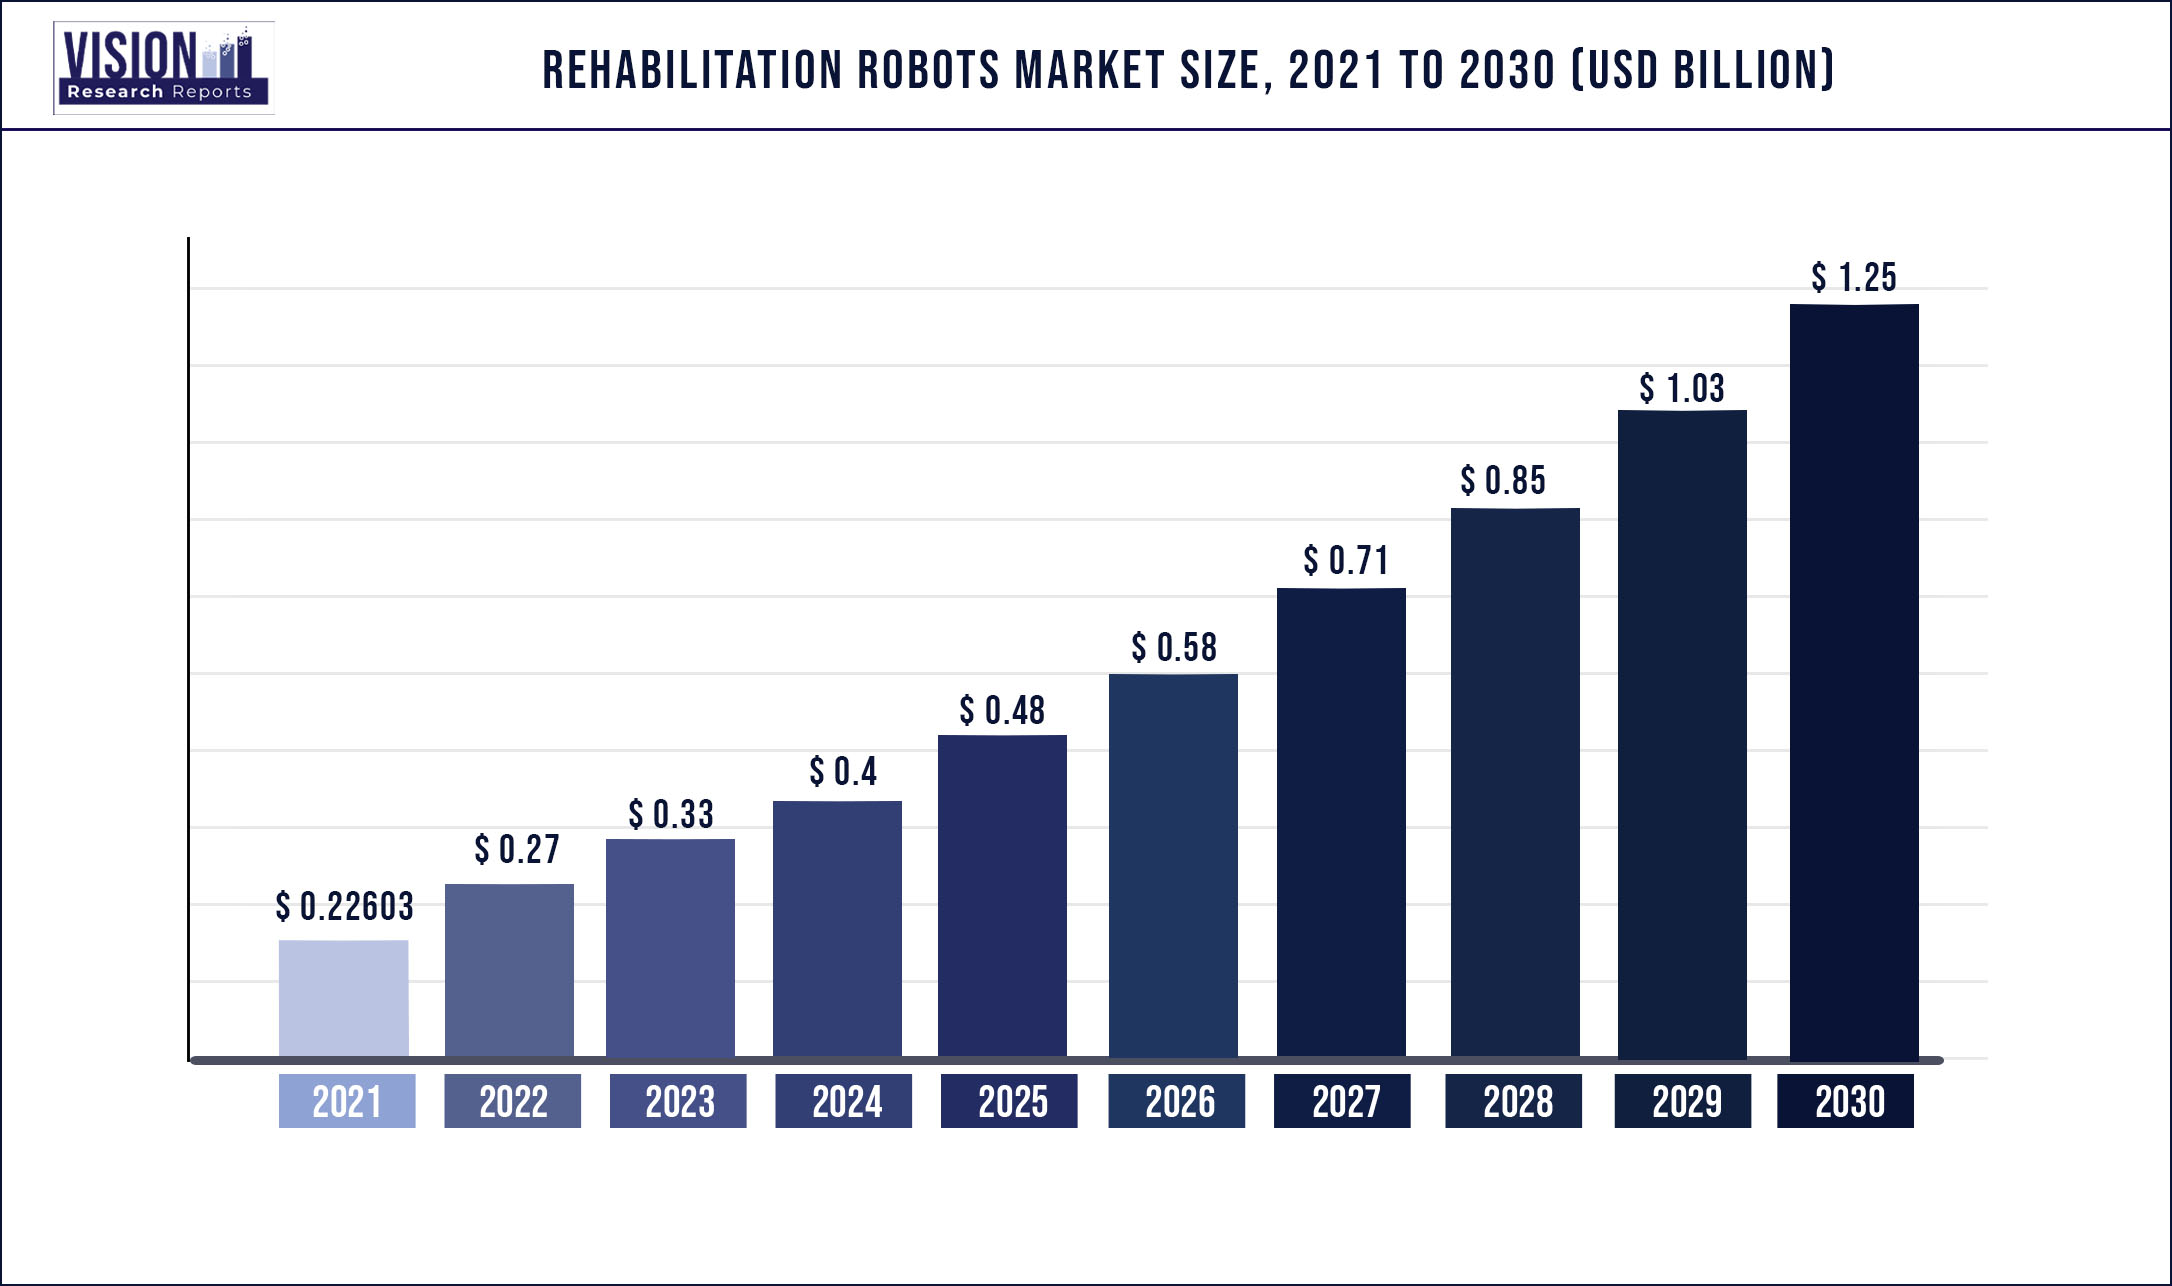 Rehabilitation Robots Market Size 2021 to 2030